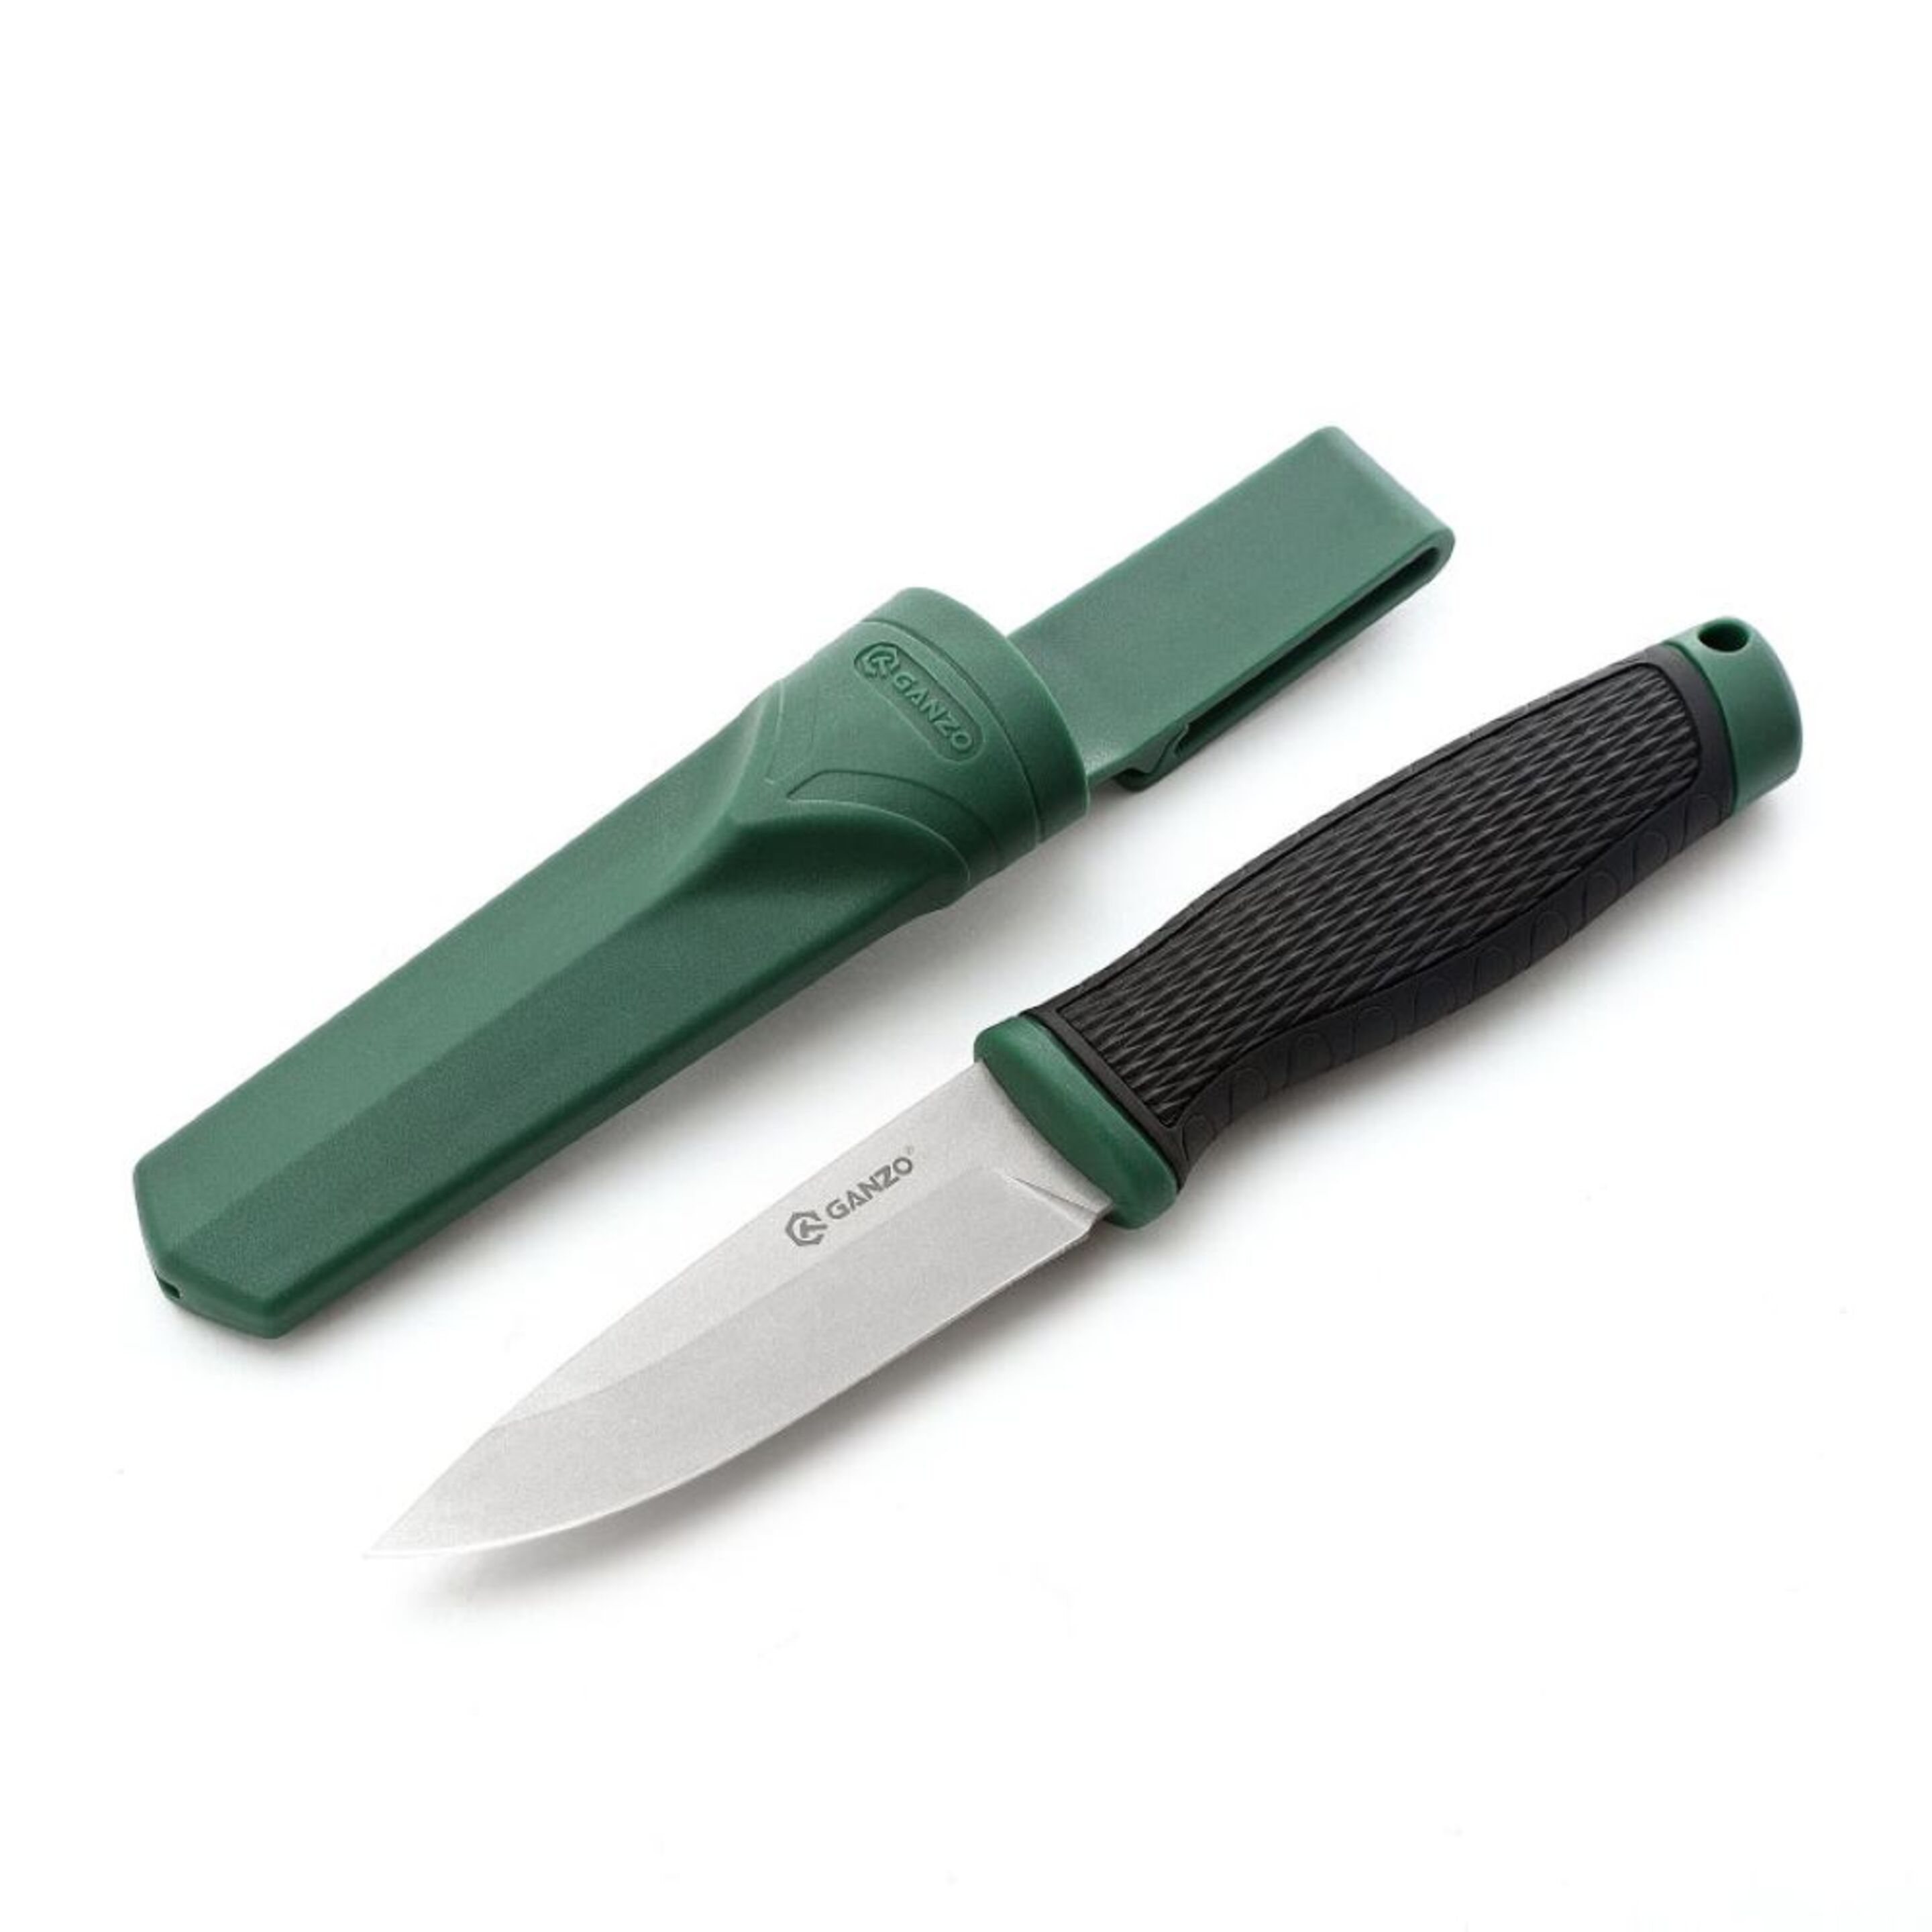 Cuchillo Ganzo G806-gb - Negro/Verde  MKP